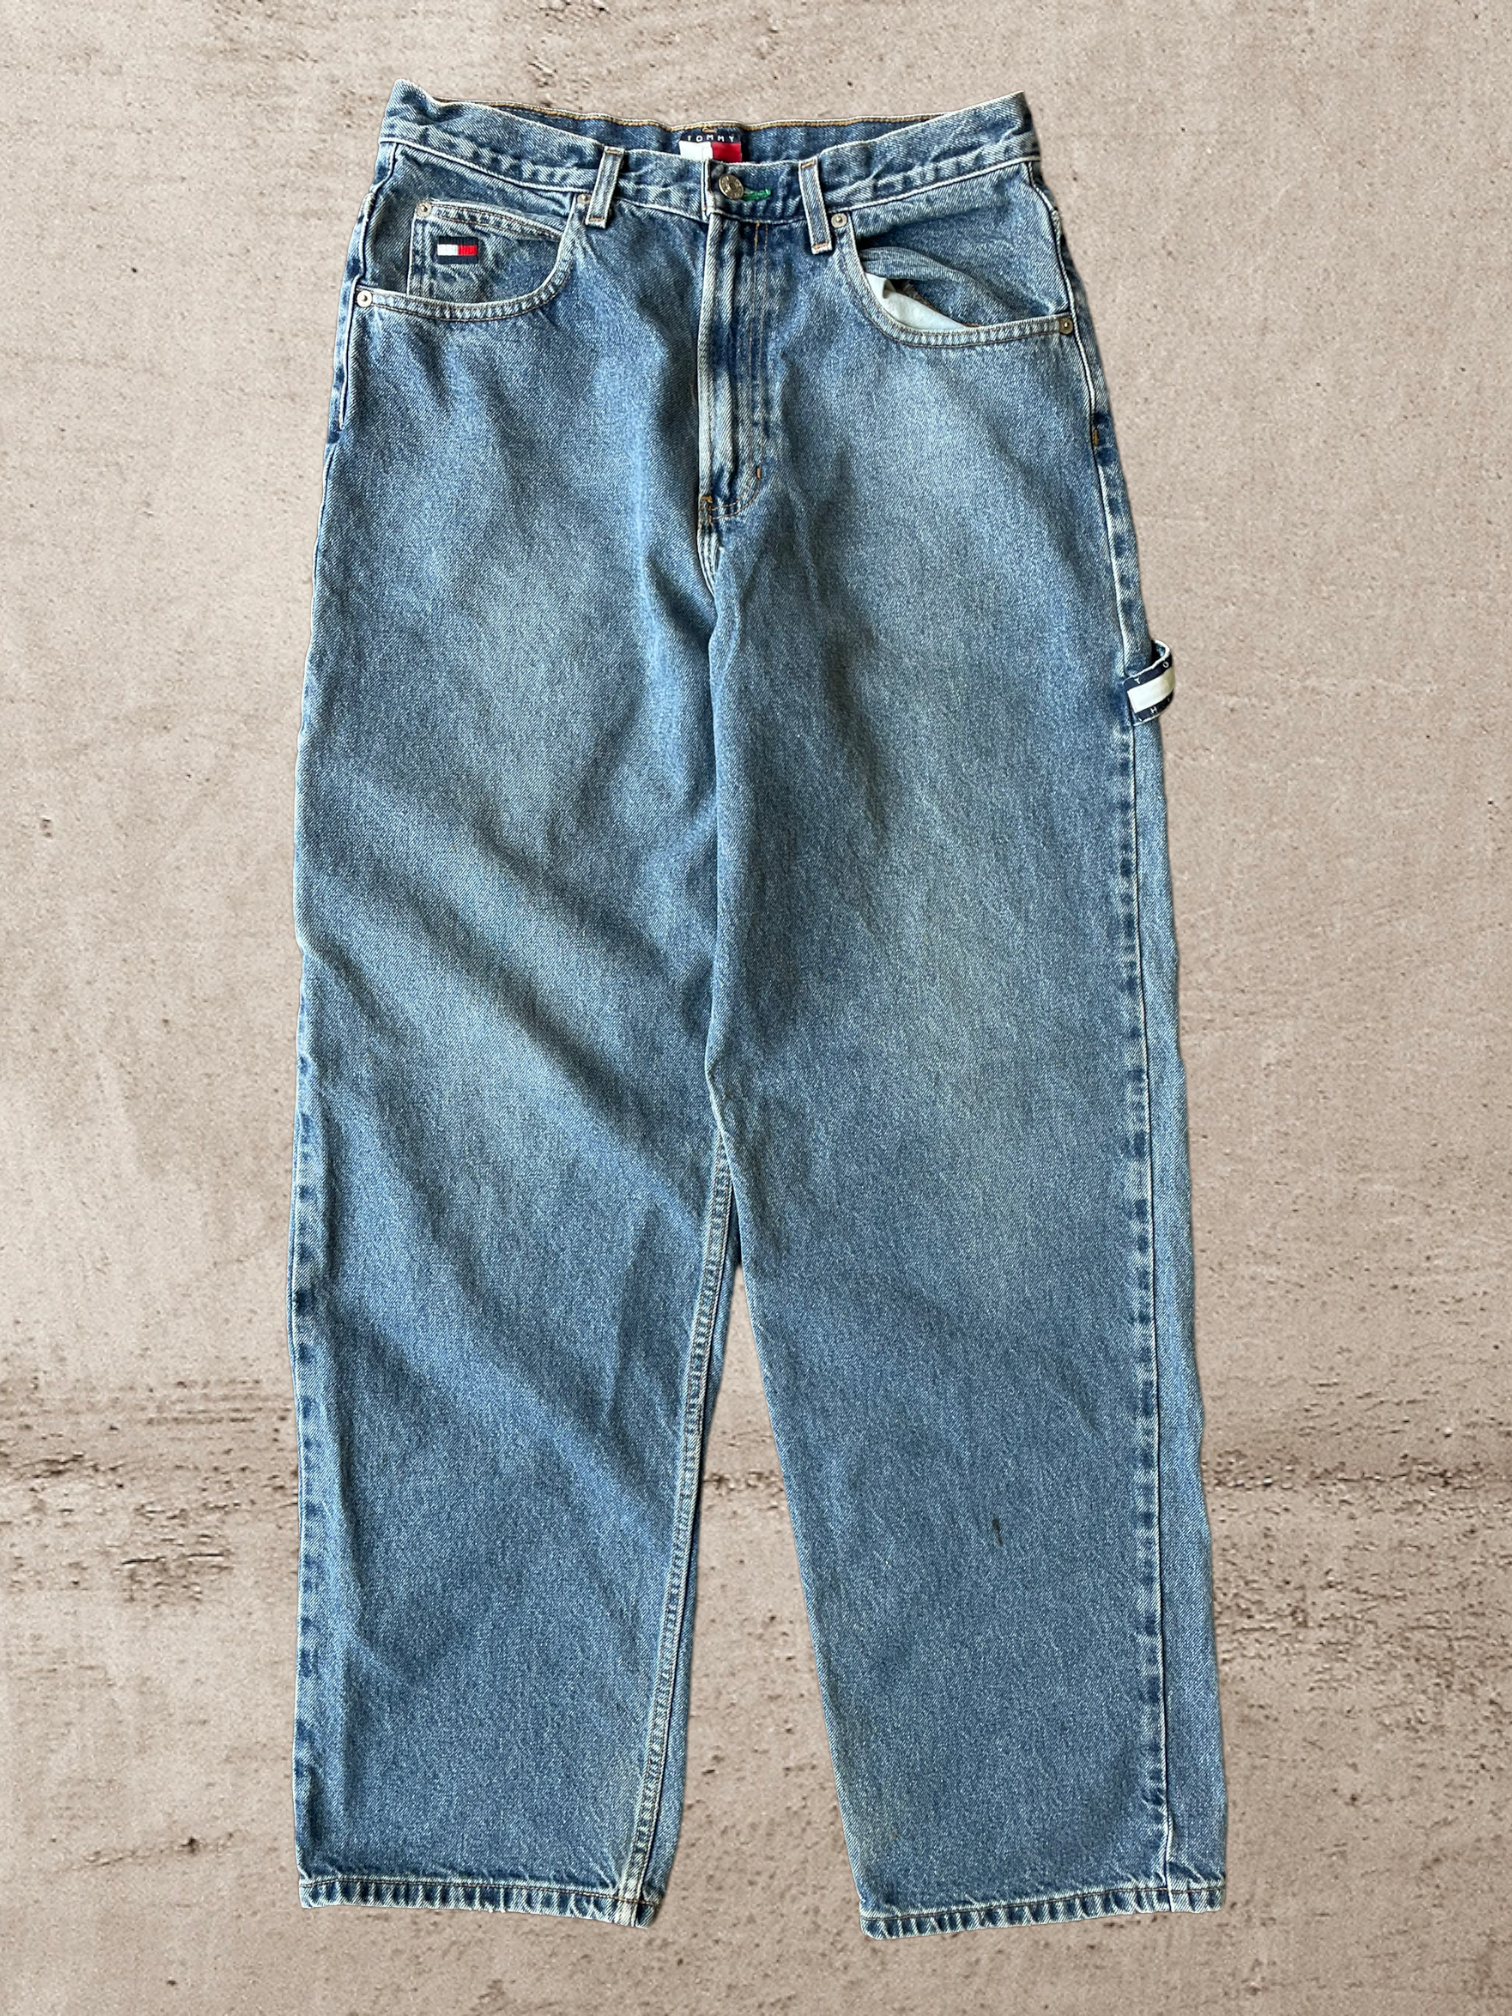 90s Tommy Hilfiger Baggy Carpenter Jeans -32x32